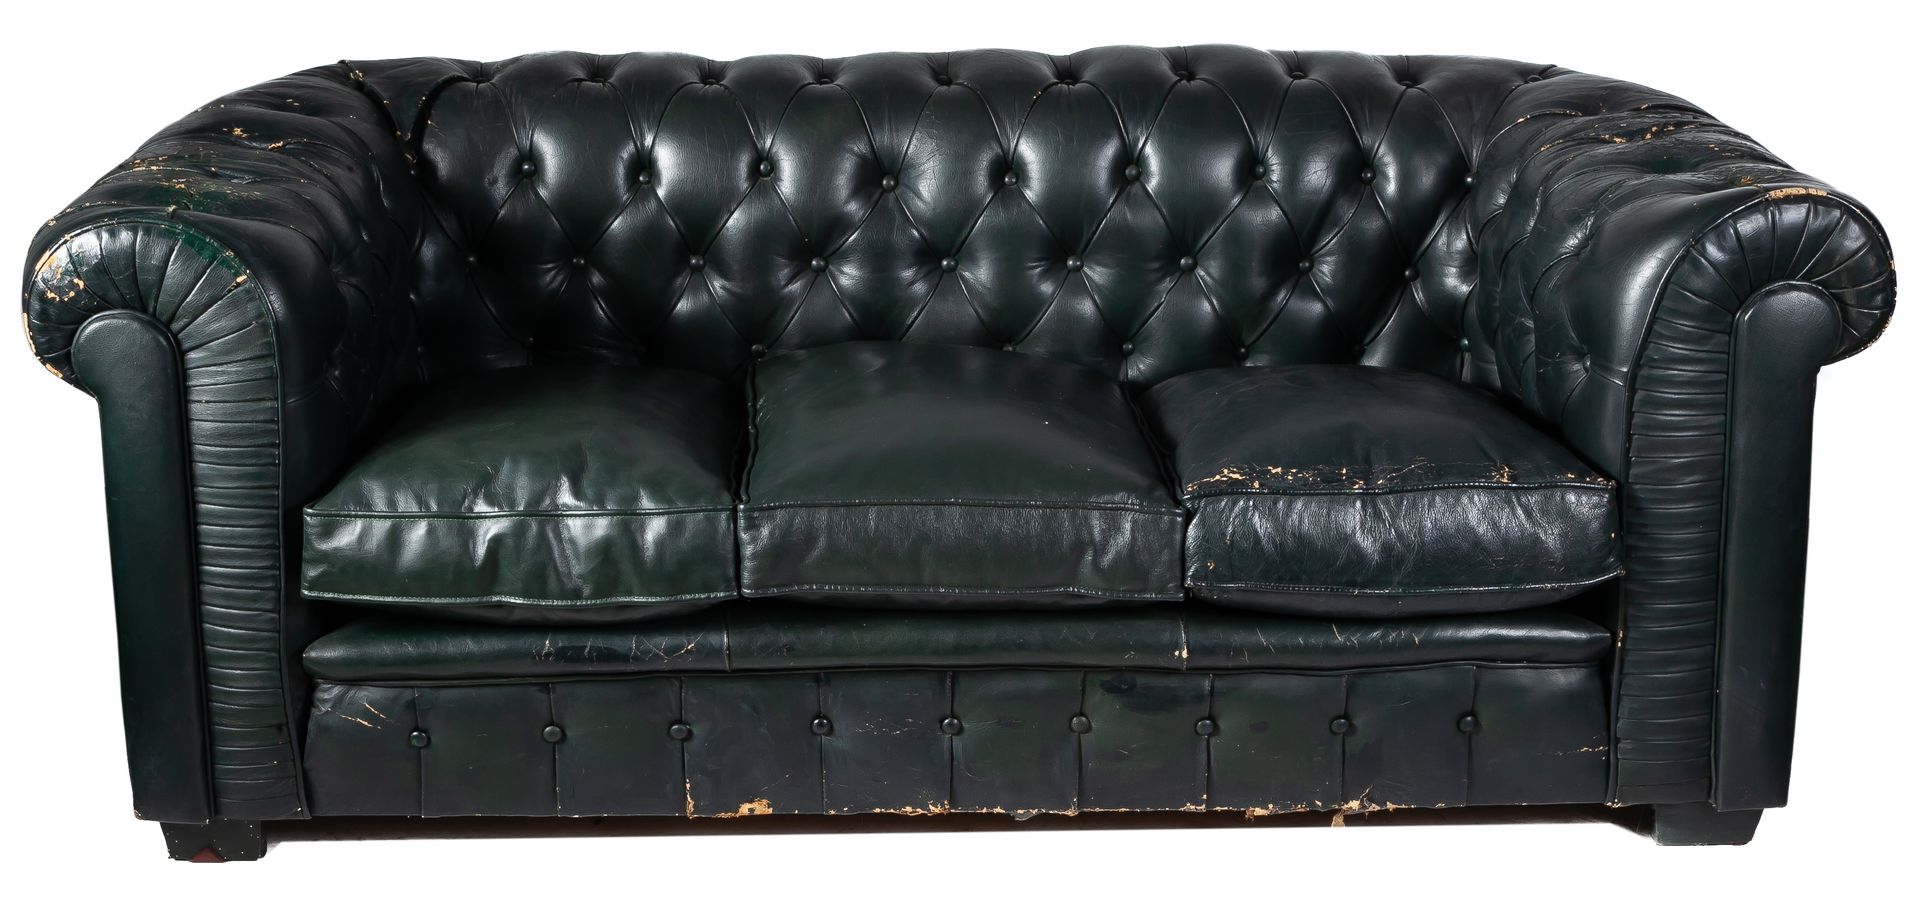 Null 切斯特沙发，绿色仿皮装饰。轻微的磨损和撕裂。

73 x 83 x 185厘米

200 - 400 €